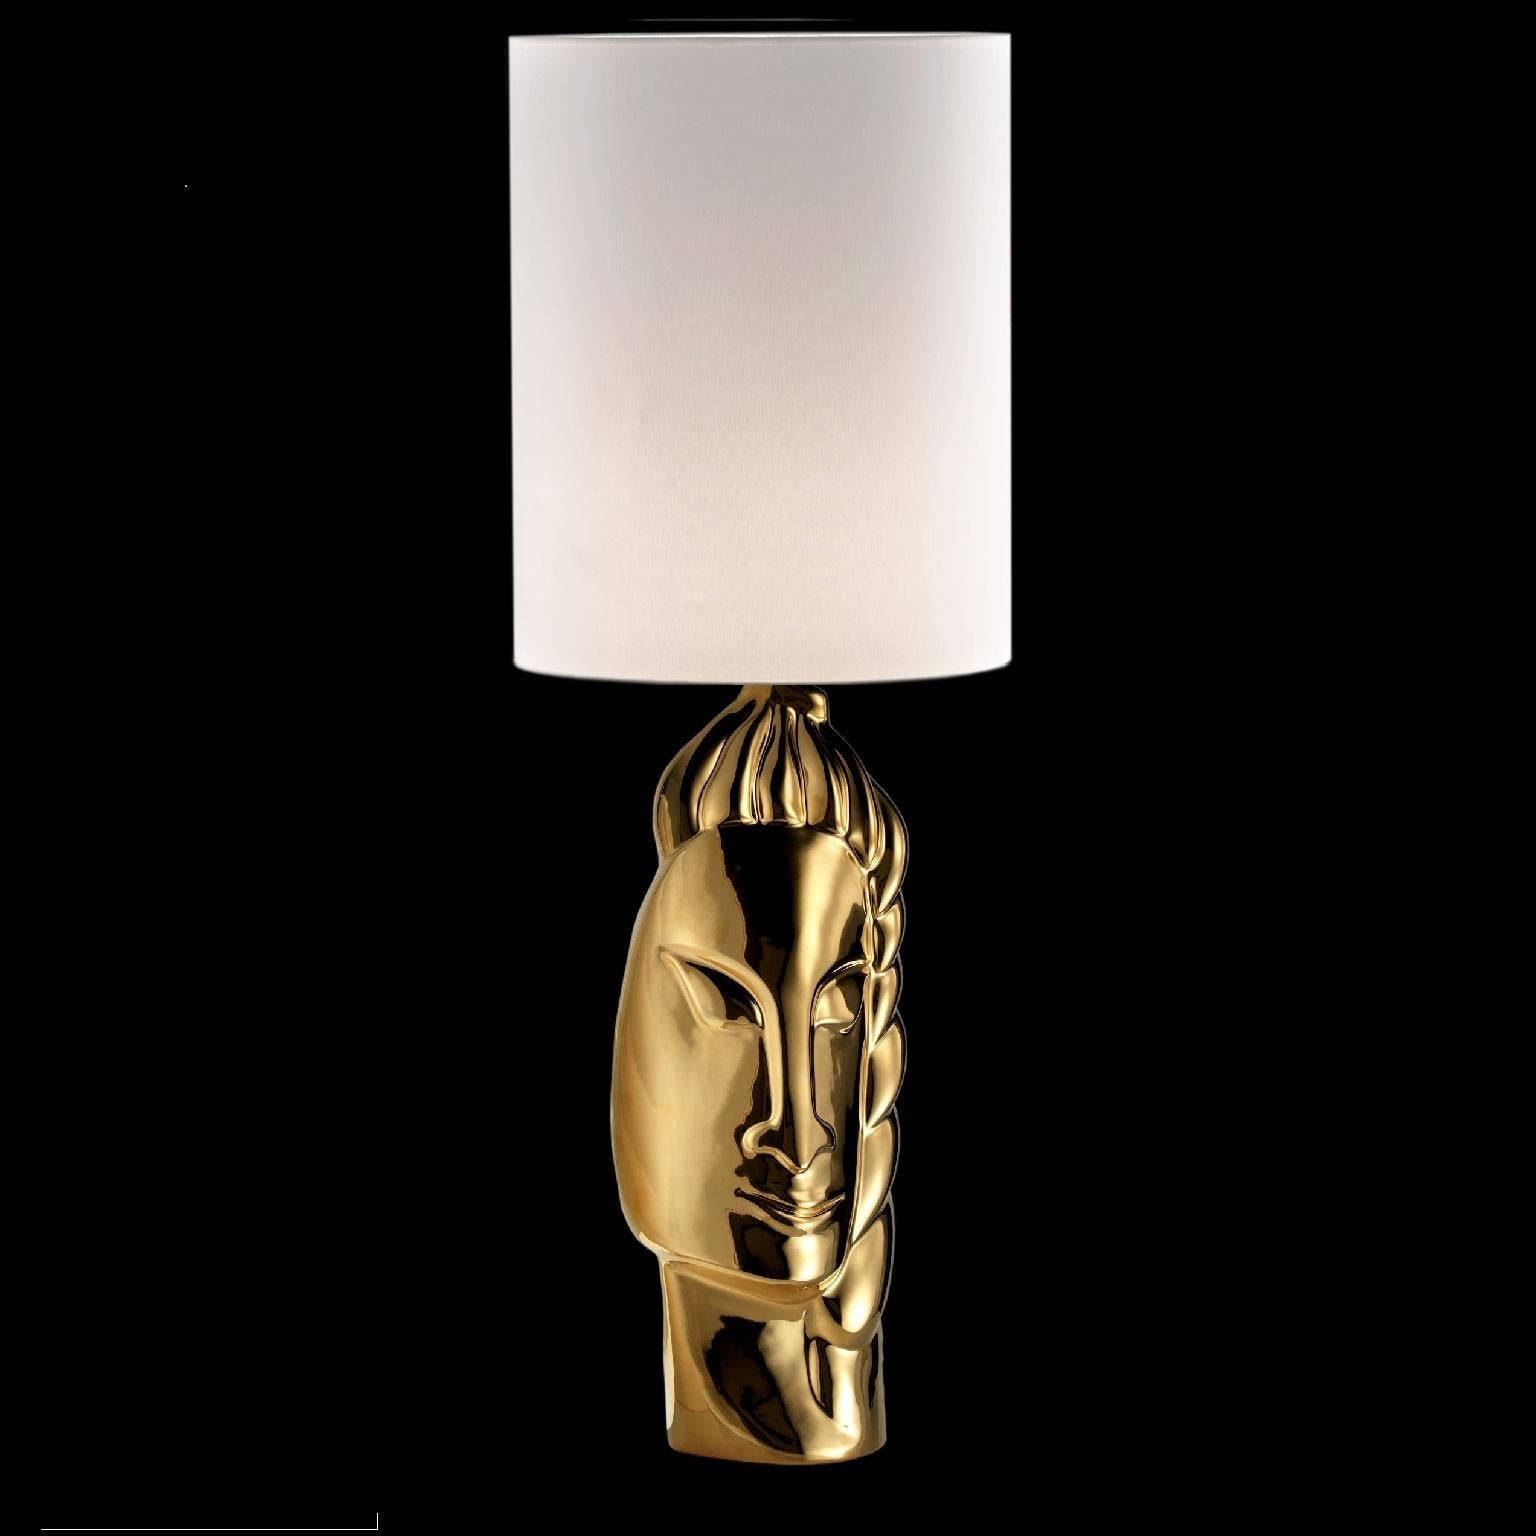 Cleta-Lampe, Keramiklampe, handgefertigt in Bronze (Handgefertigt) im Angebot